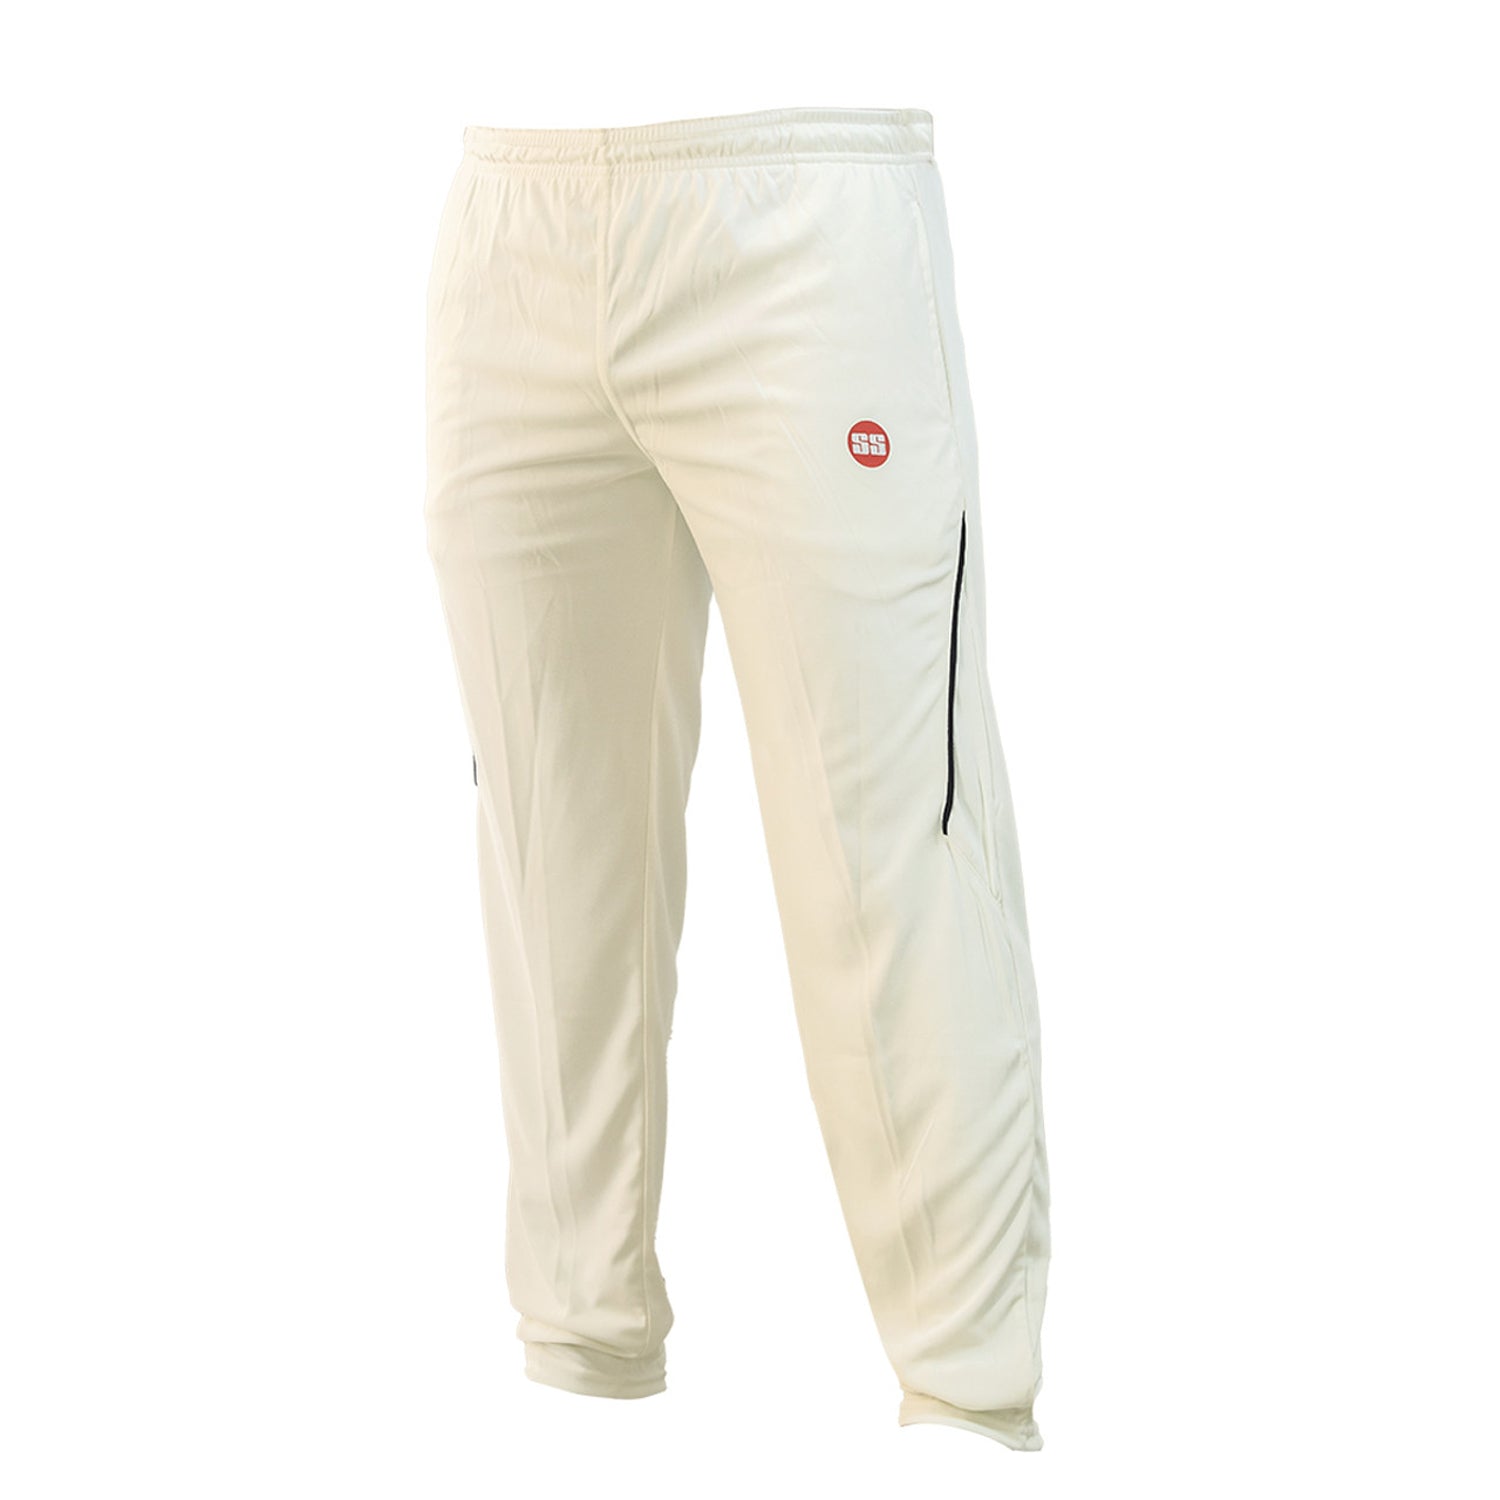 SS Player Cricket Trouser, White - Best Price online Prokicksports.com